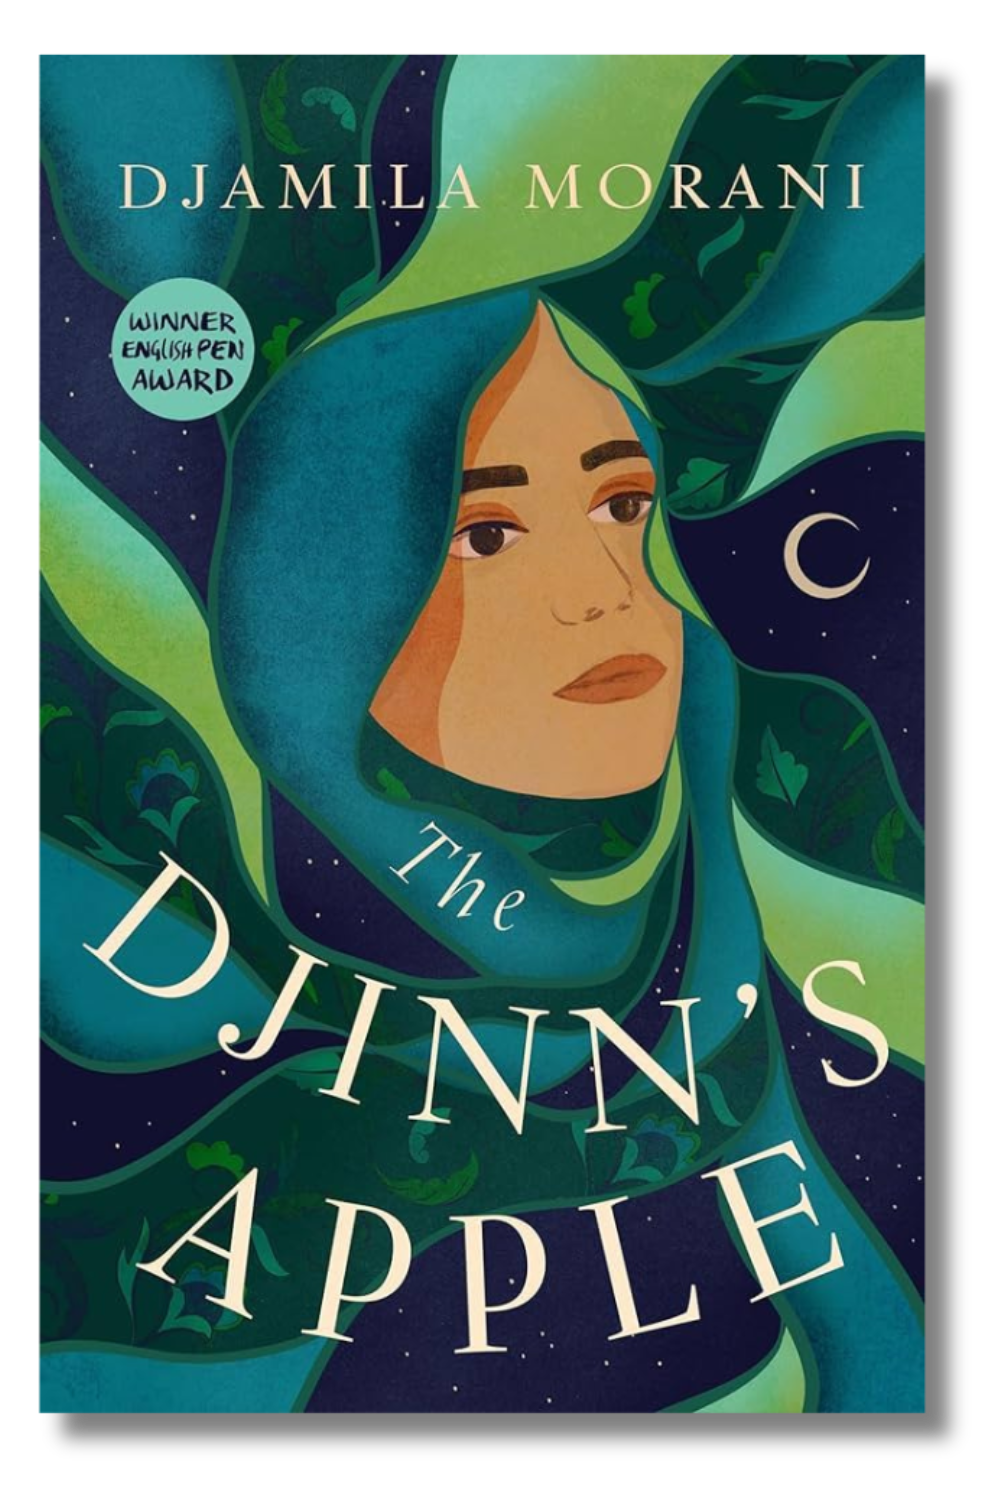 The cover of "The Djinn's Apple" by Djamila Morani, tr. by Sawad Hussain